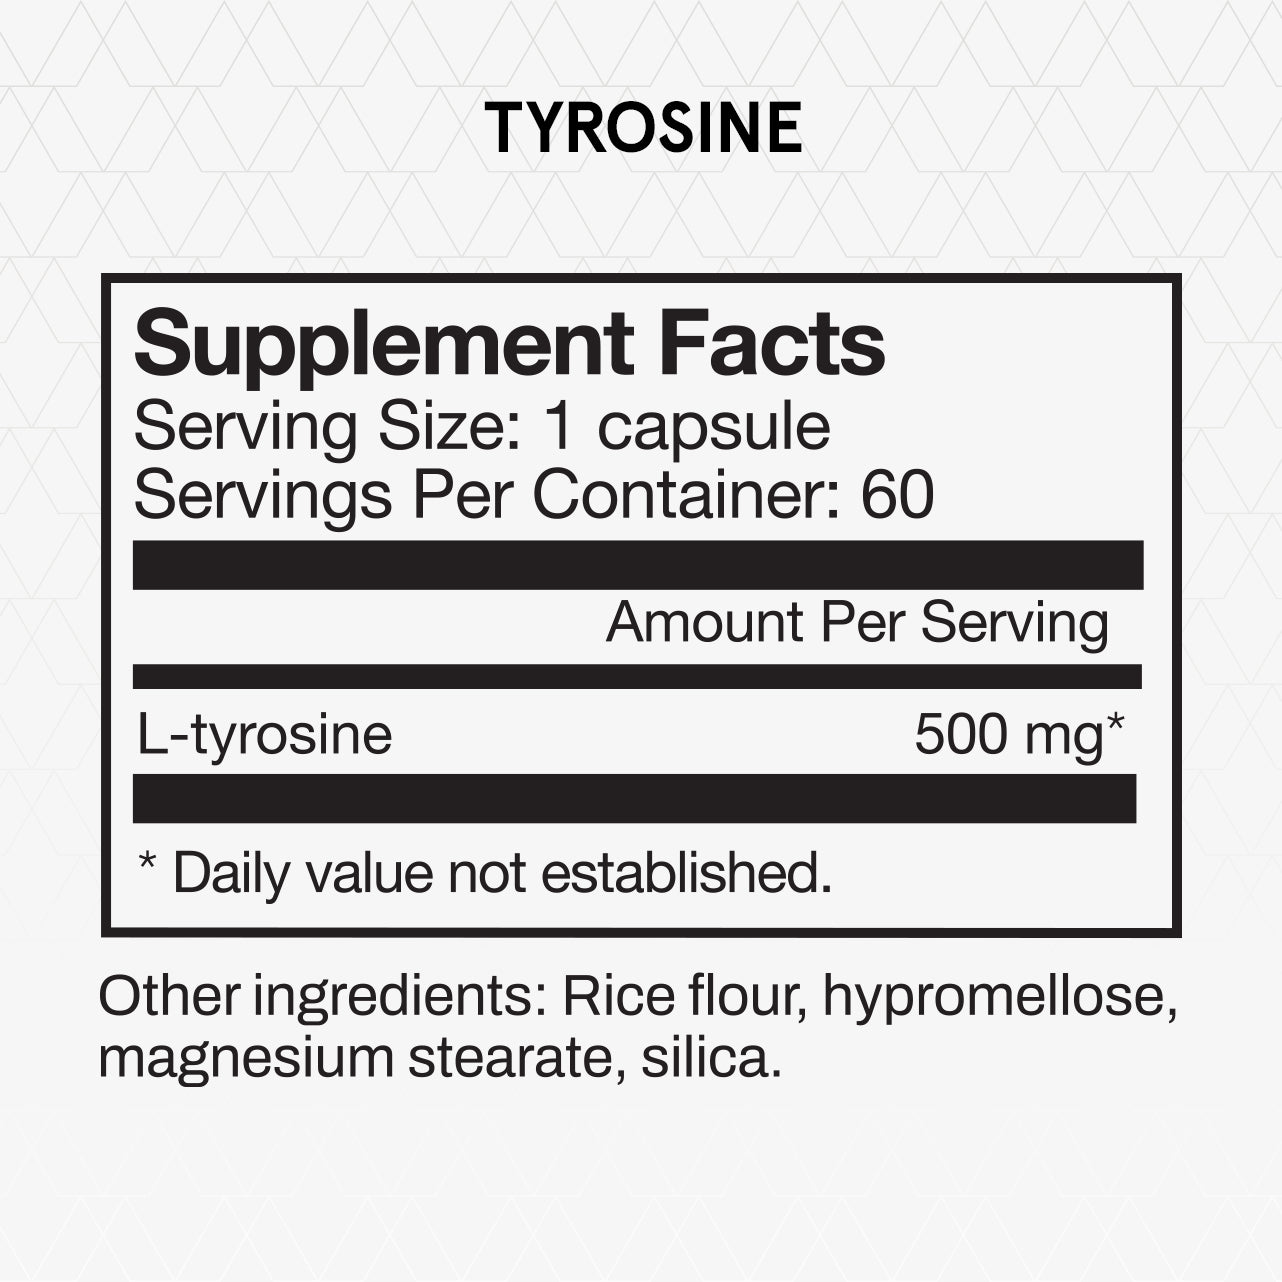 Tyrosine Capsules fact